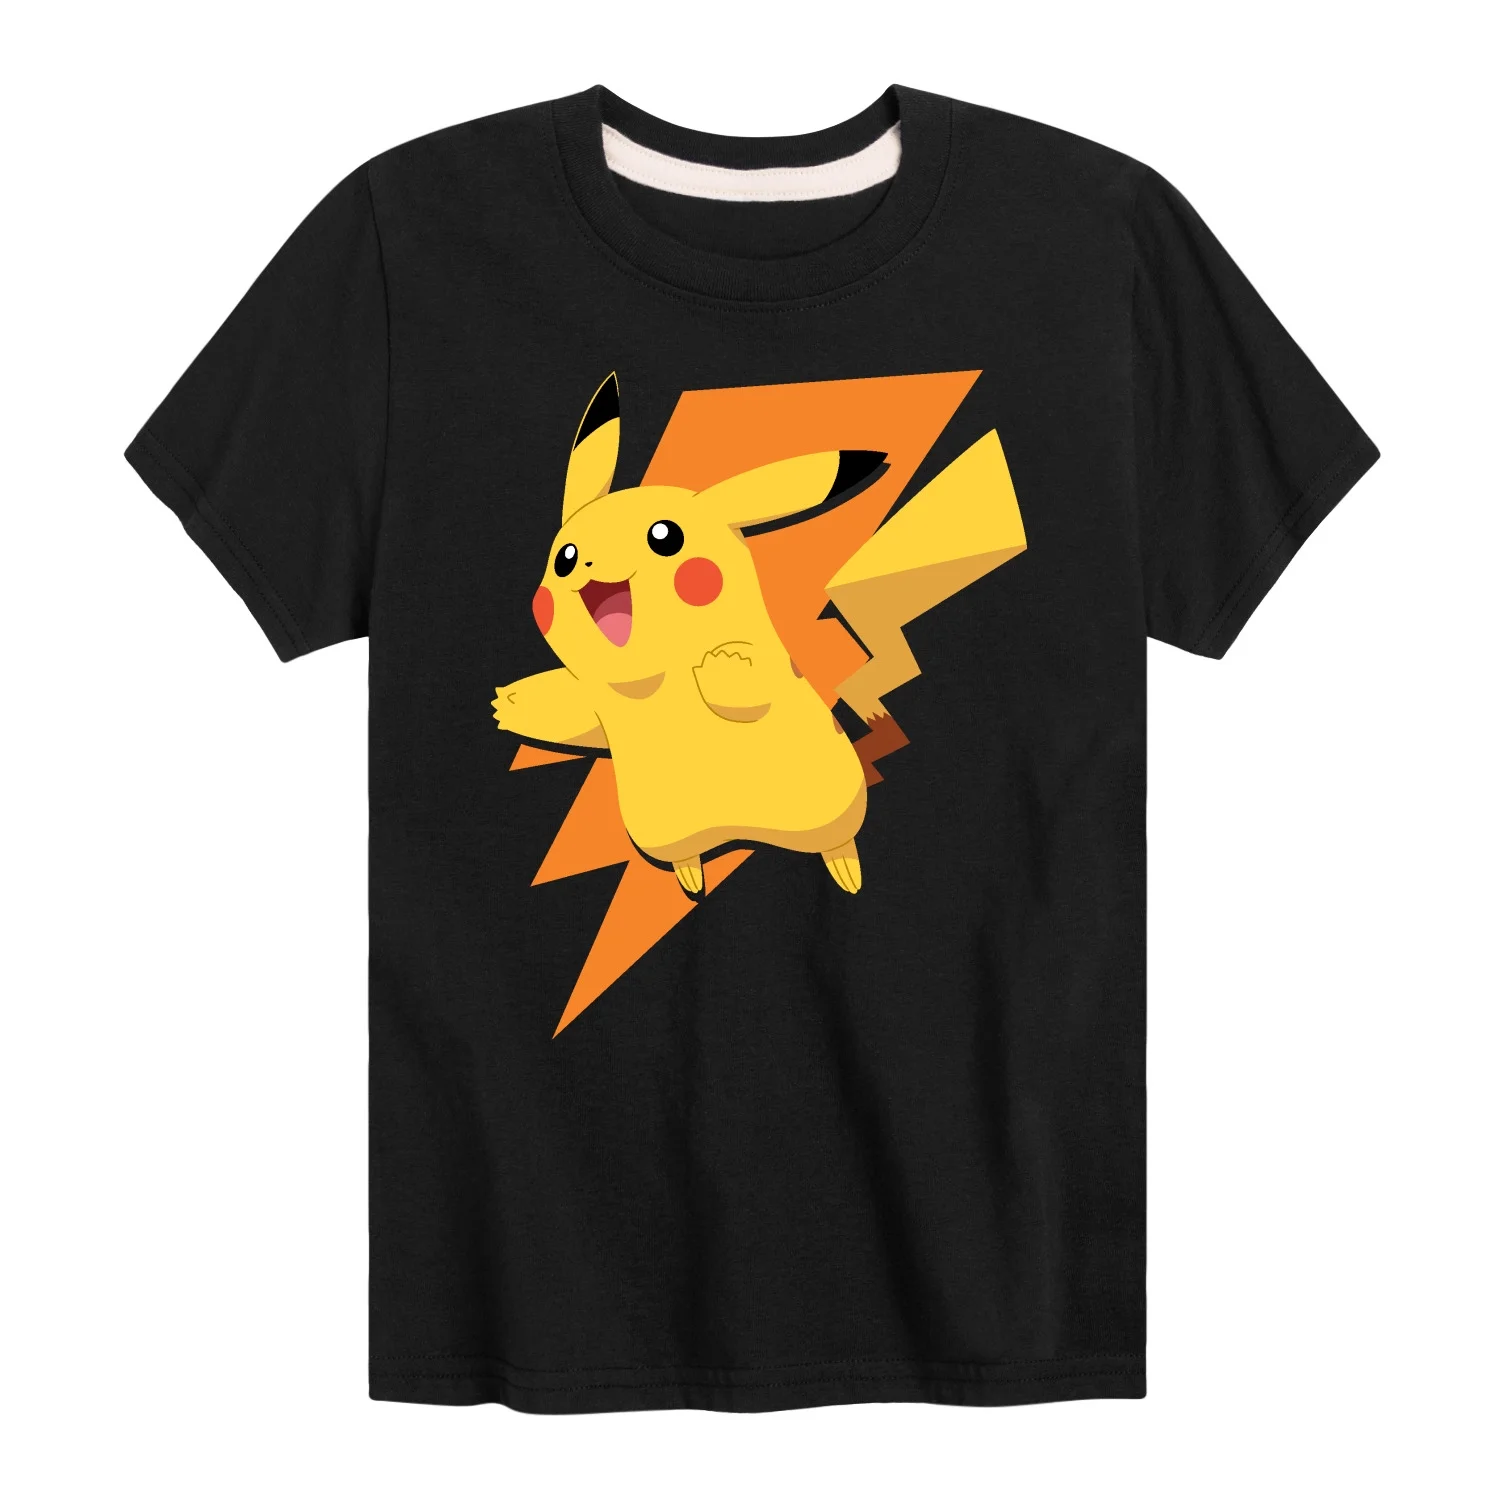 Pokémon - Pikachu Thunderbolt - Youth Short Sleeve Graphic T-Shirt